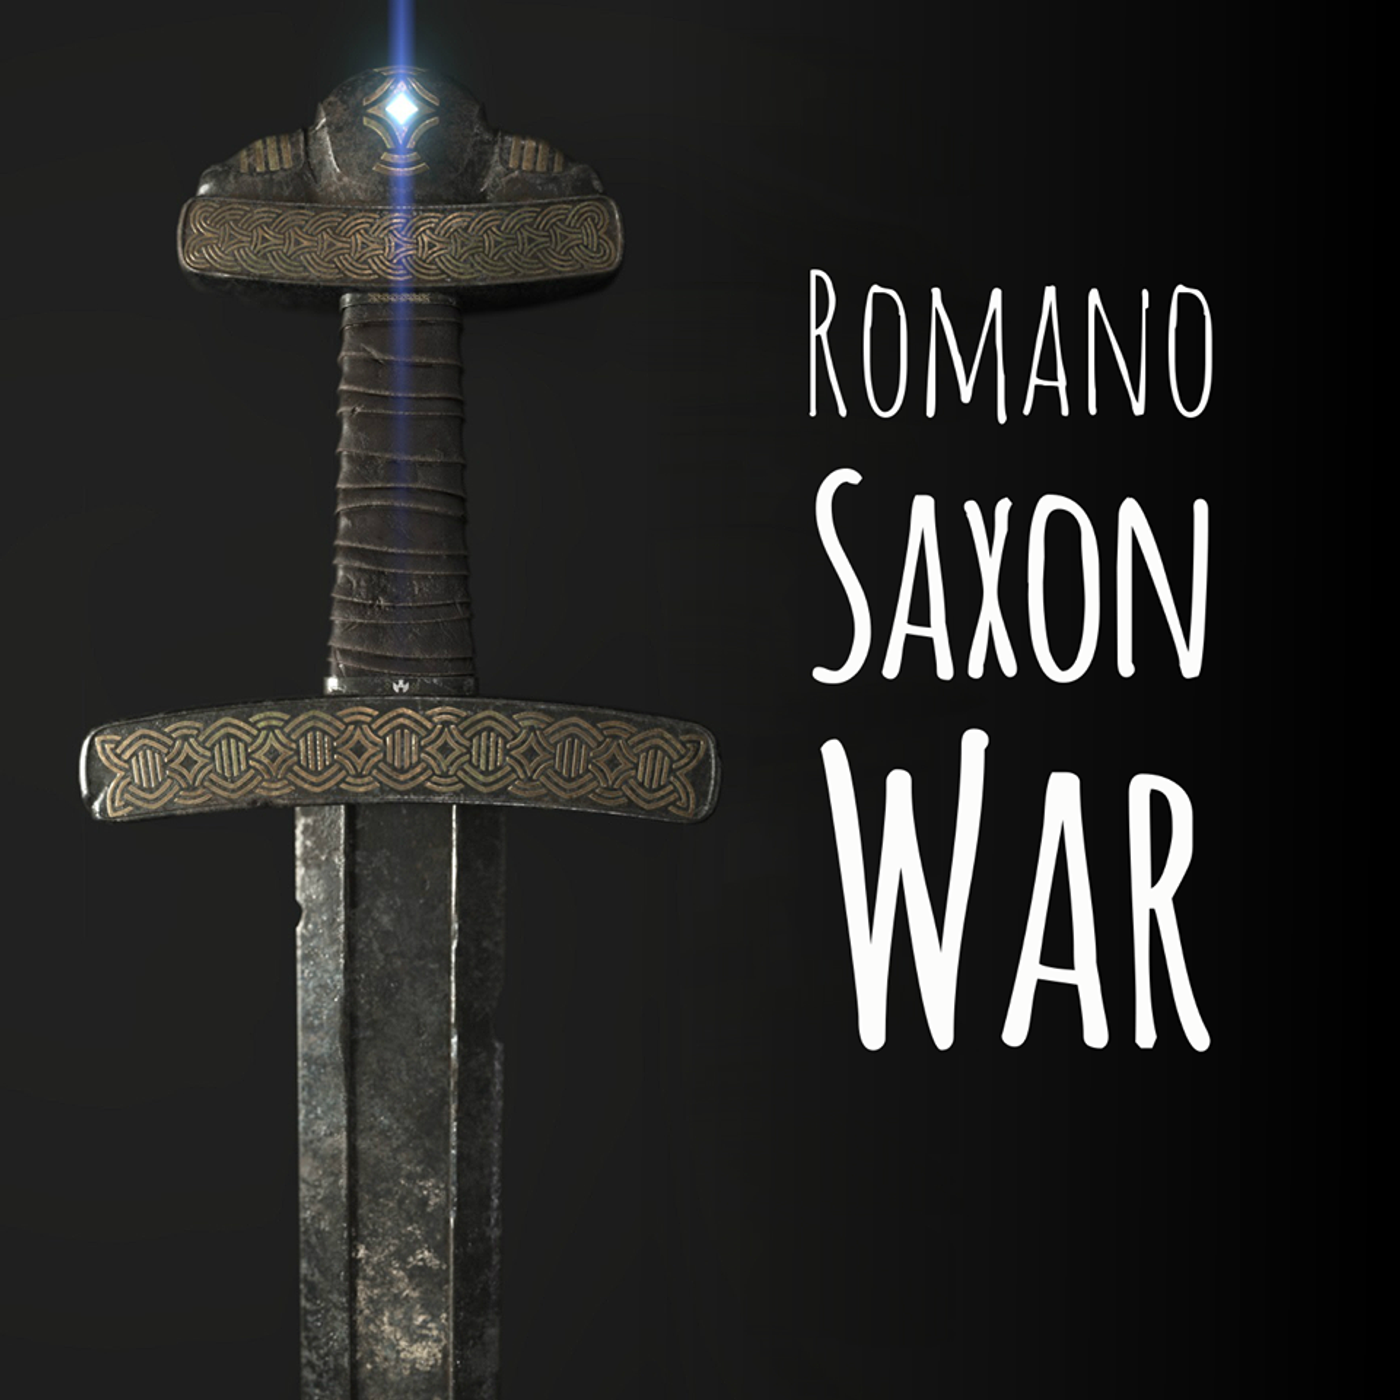 Romano Saxon War, Part 7